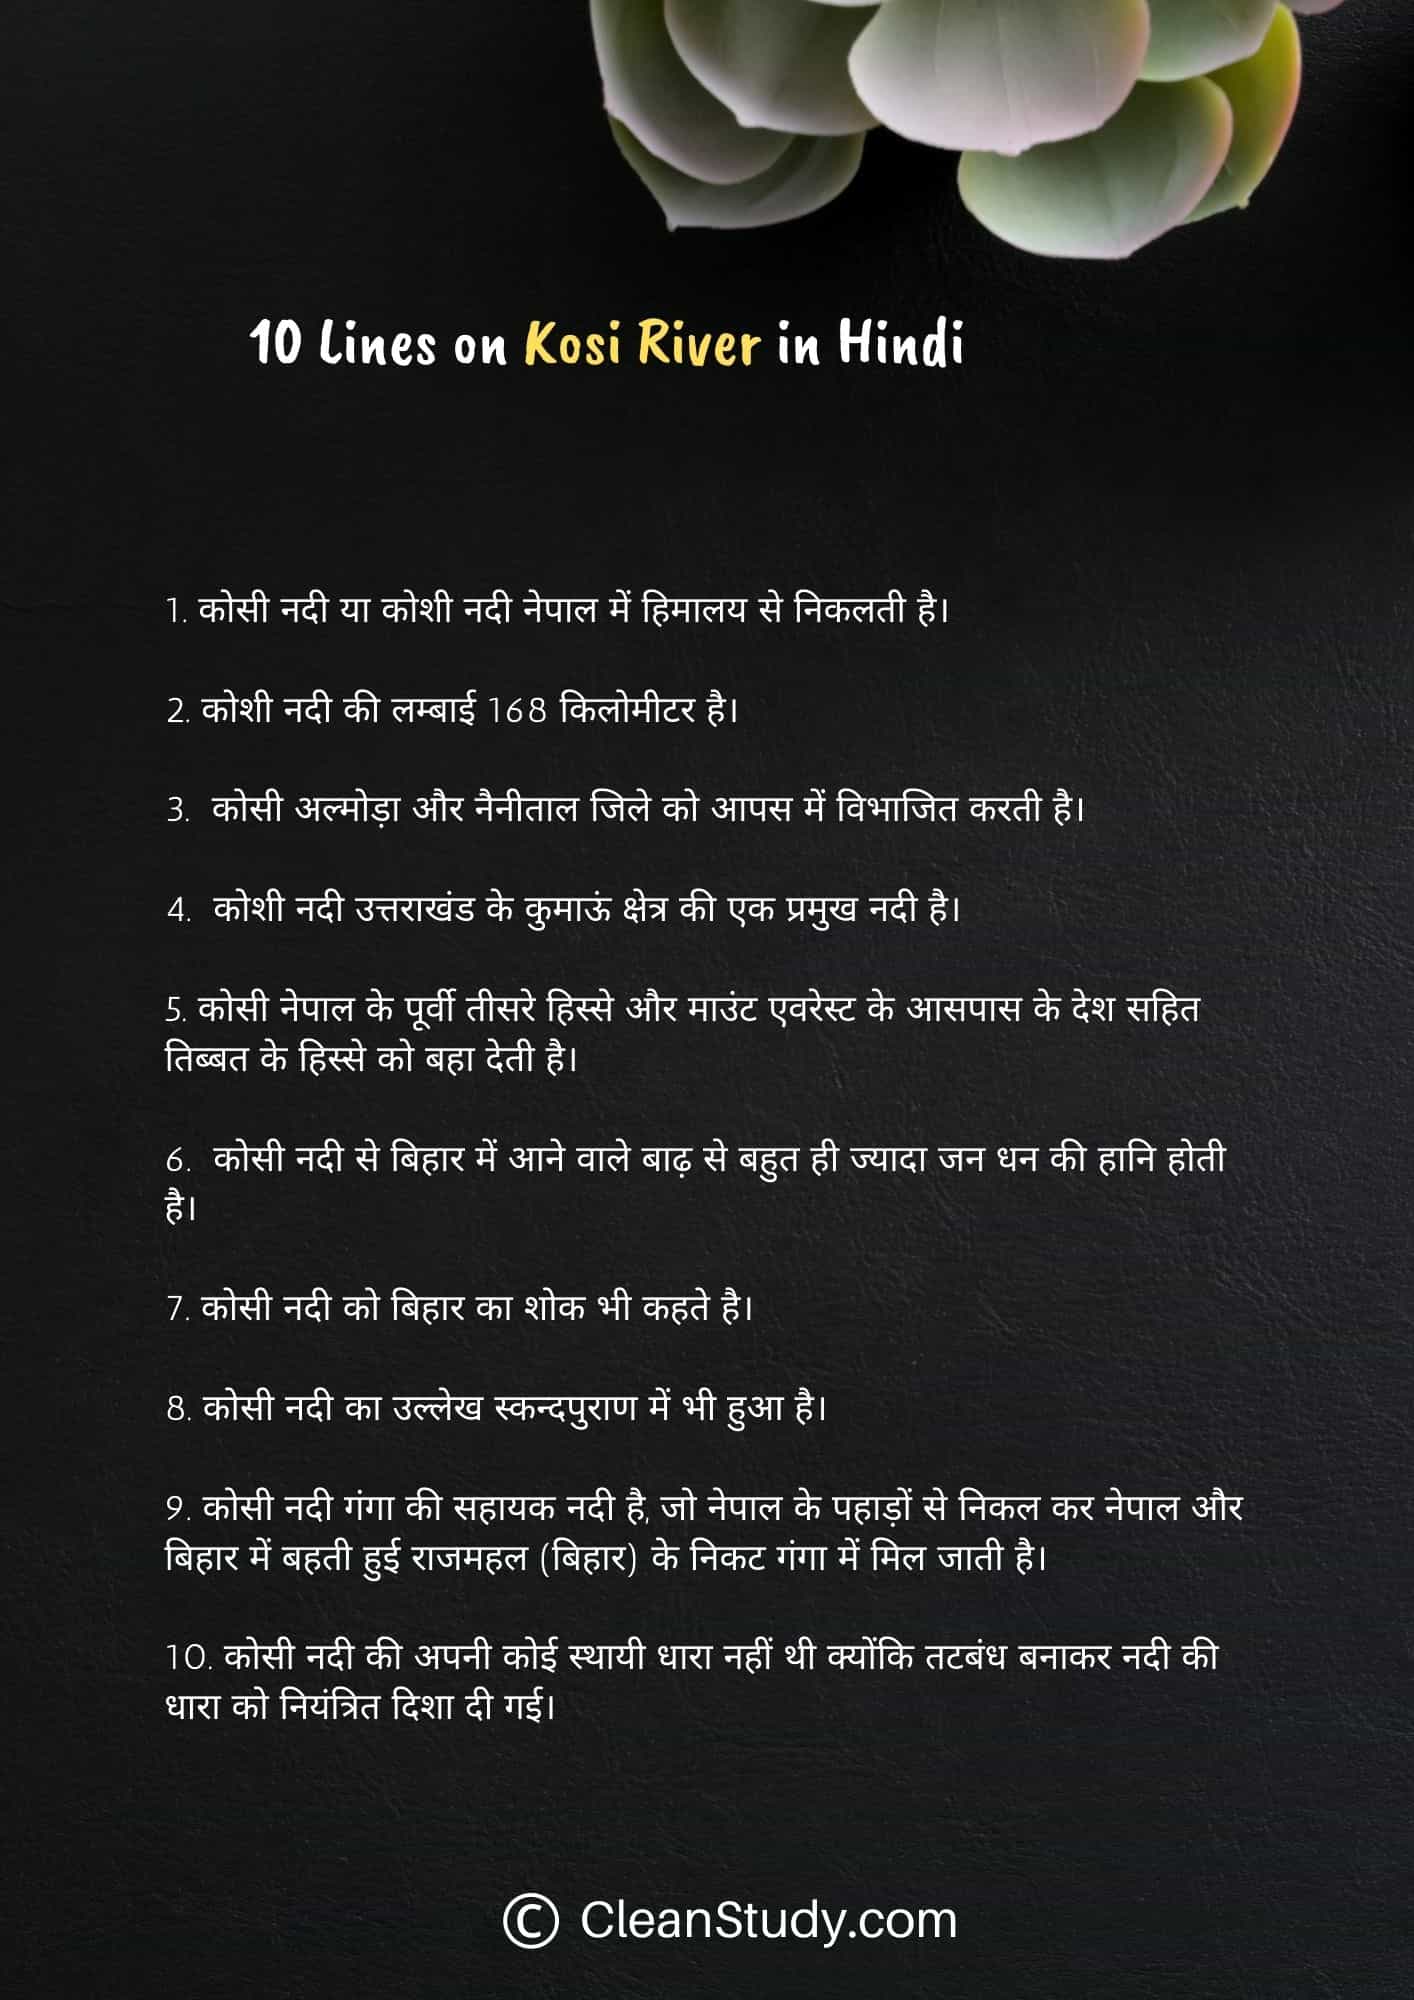 10 Lines on Kosi River in Hindi